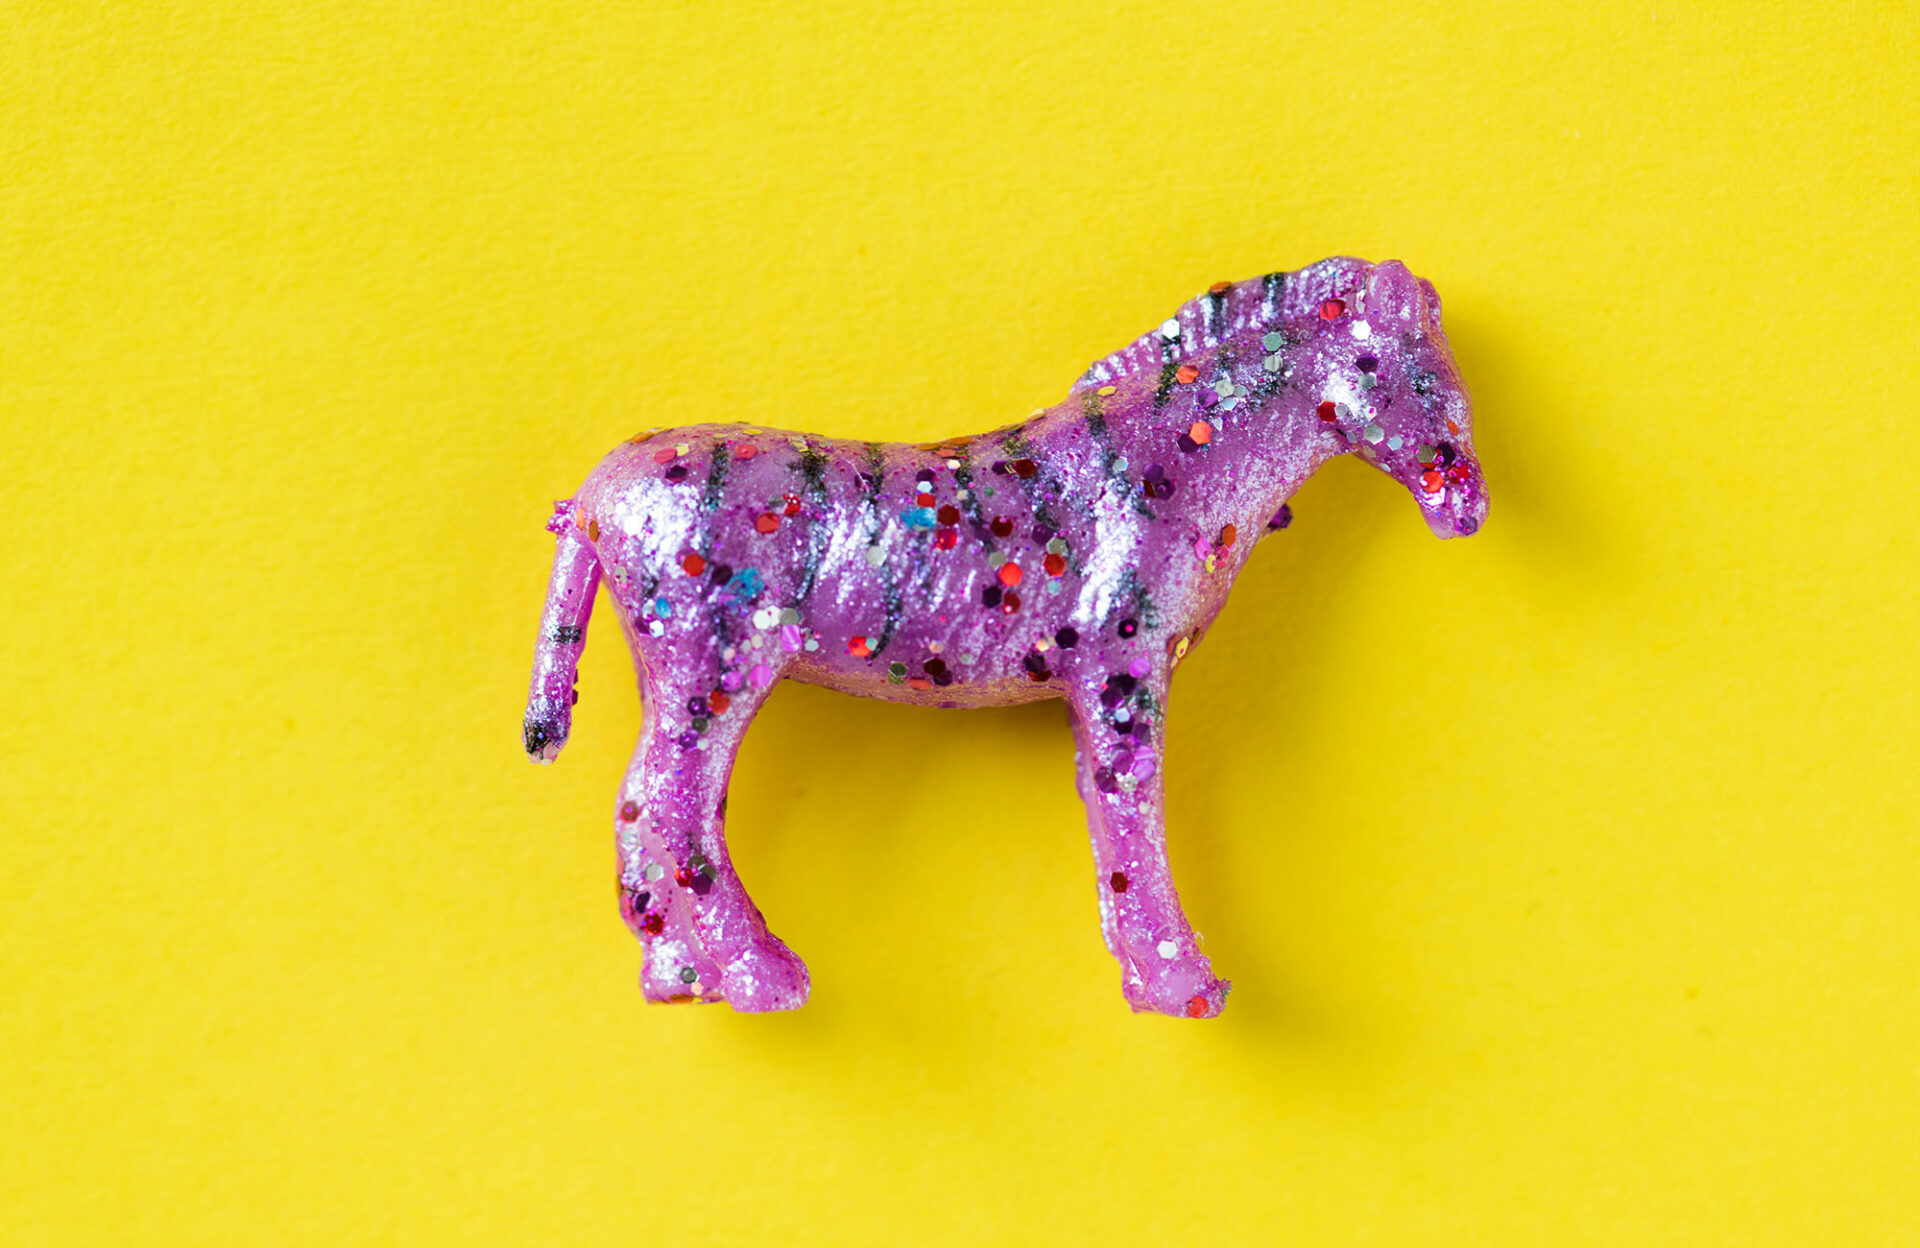 A shiny toy horse